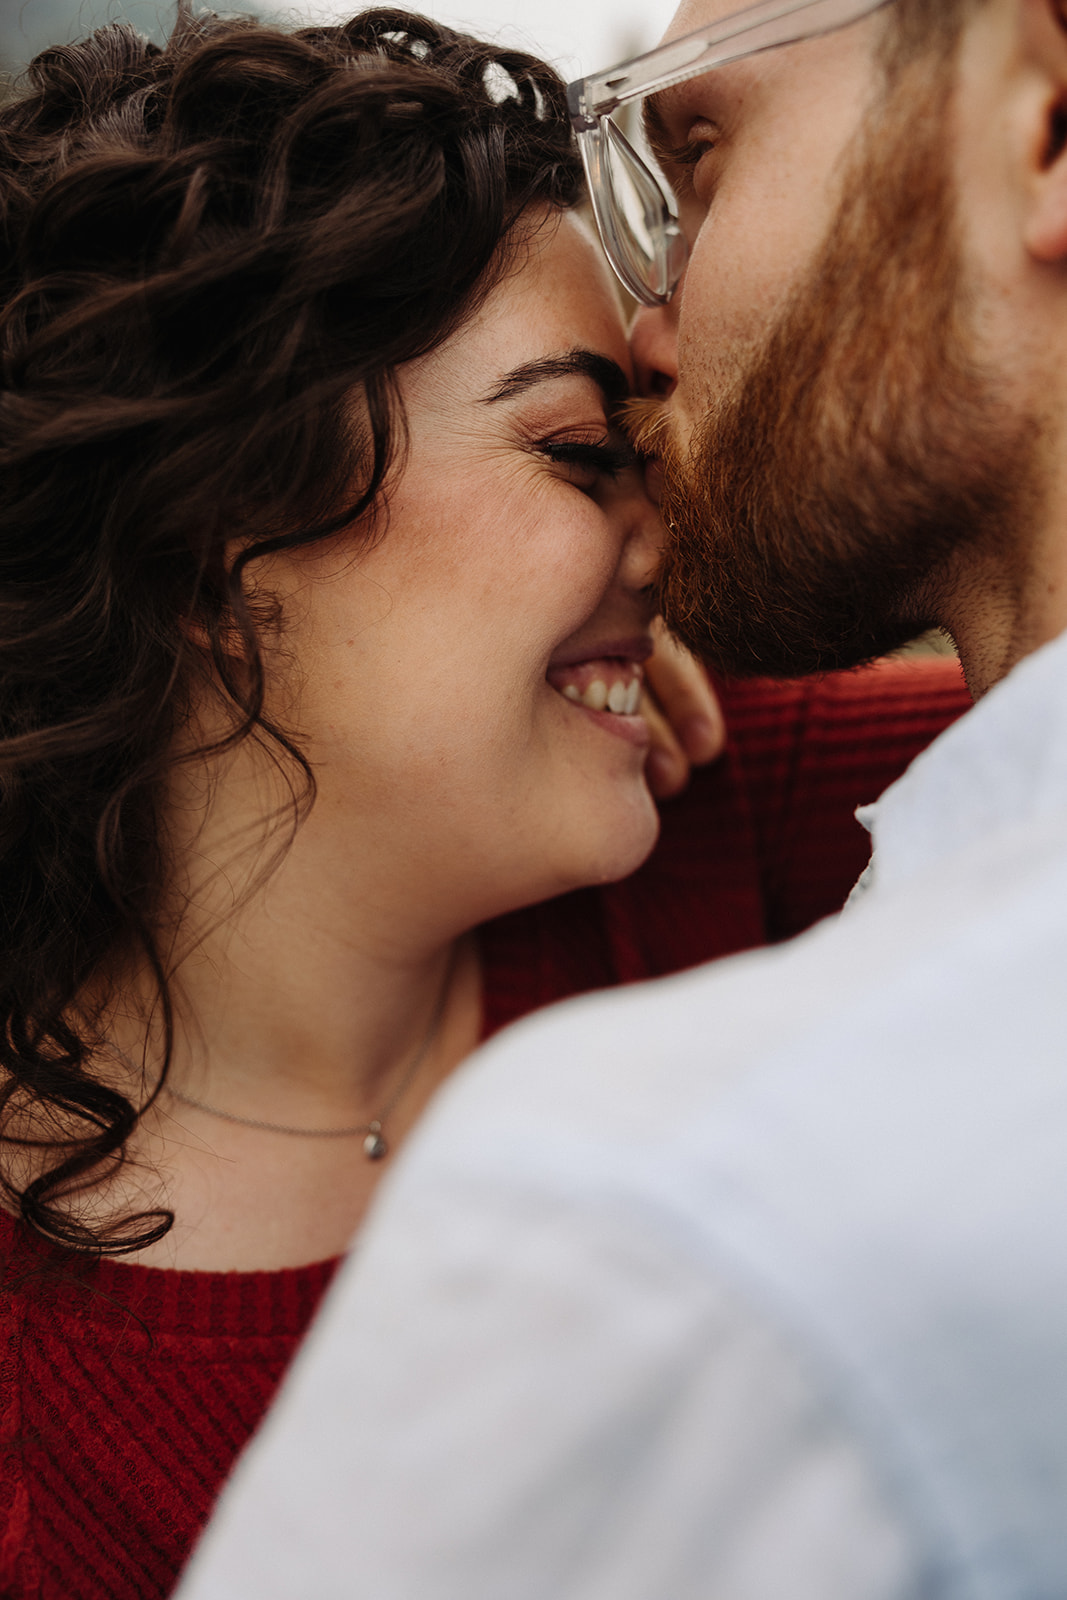 A man kissing a wonas nose while she smiles 